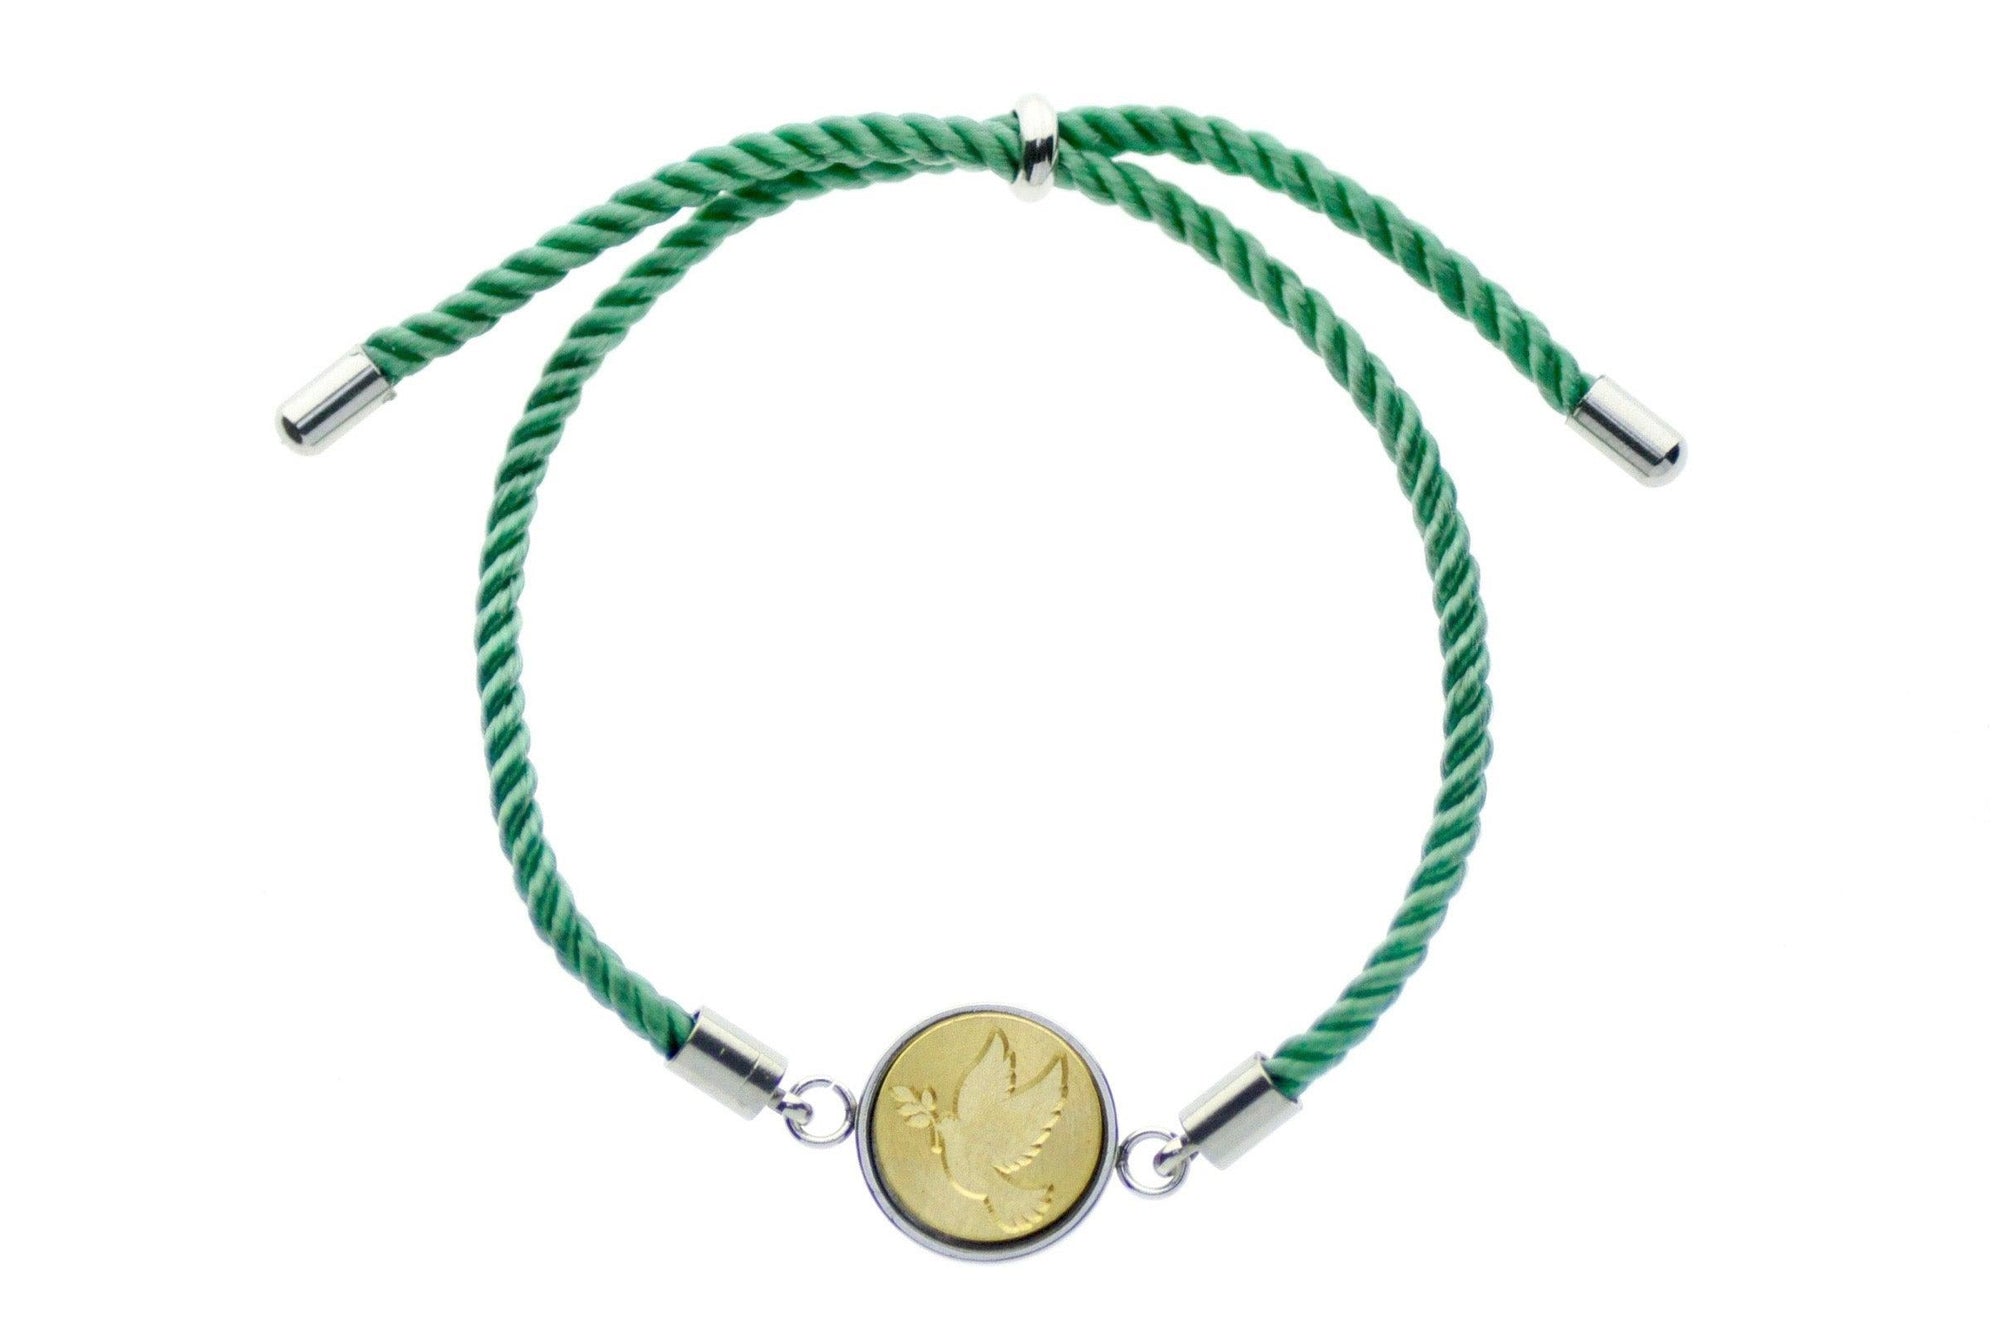 Dove Signet Bracelet - Backtozero B20 - 10mm, 12mm, adjustable, bird, blue, bracelet, brass, cord, cord bracelet, dove, green, minimal, peace, signet, signet bracelet, stainless steel, twist cord